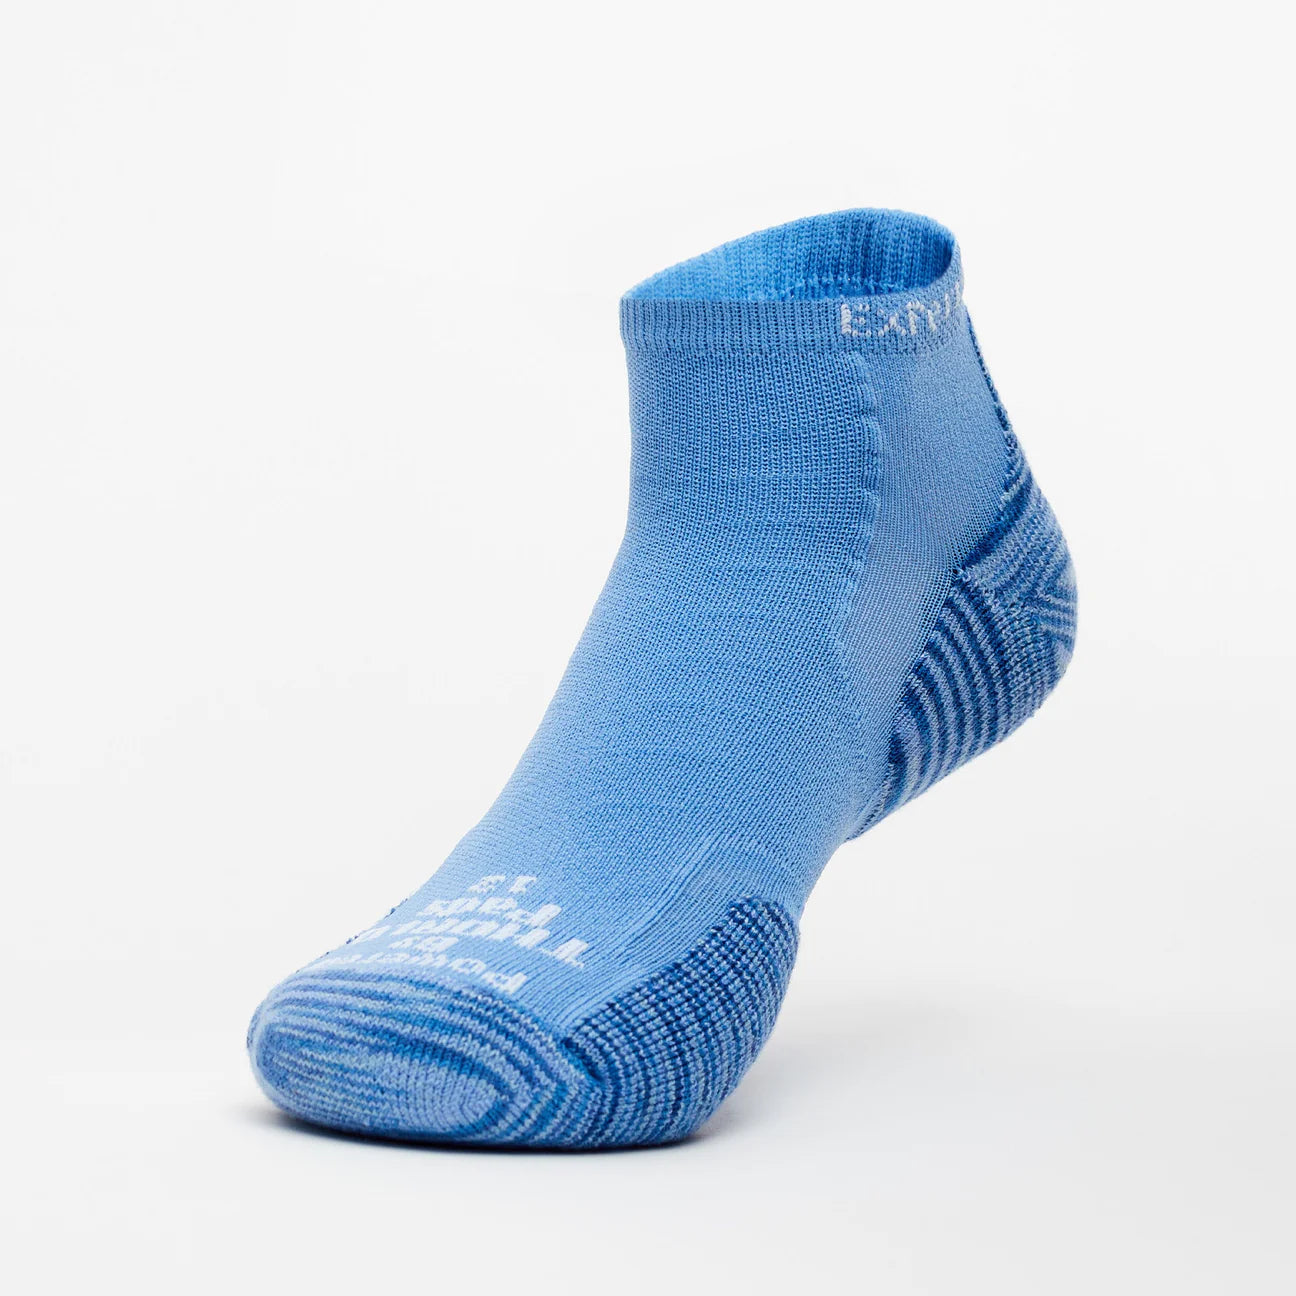 Thorlo Experia TIGER PAWS Lite Cushion Low Cut Socks (Unisex) - Blue